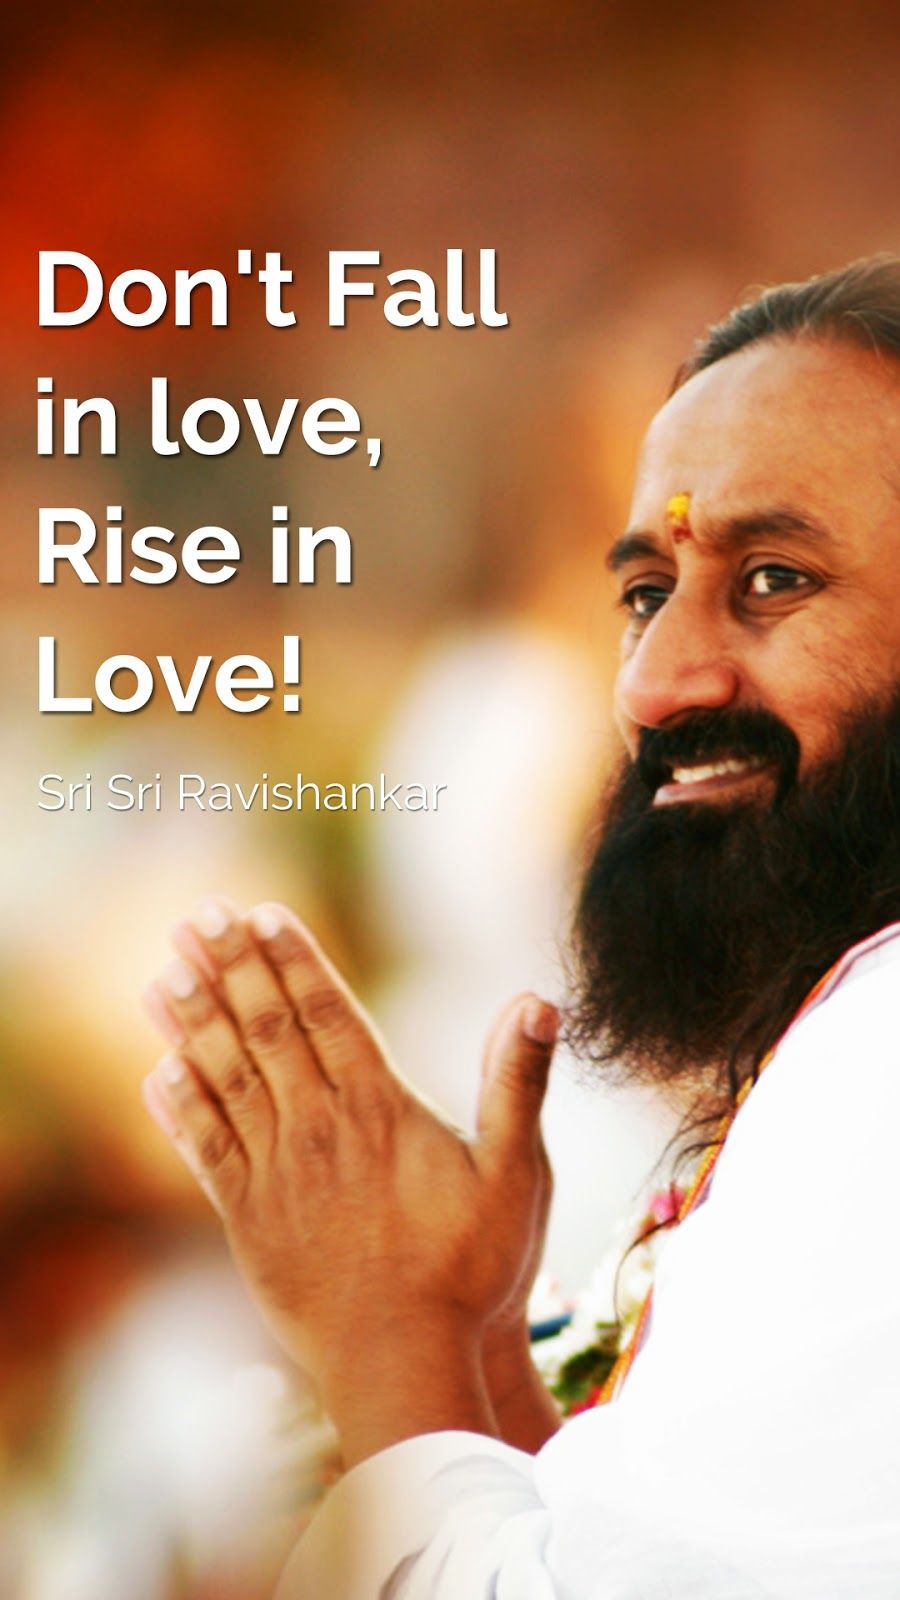 HD mobile wallpaper of Sri Sri Ravishankar guruji quotes. Sri sri, Dont fall in love, Buddha quote